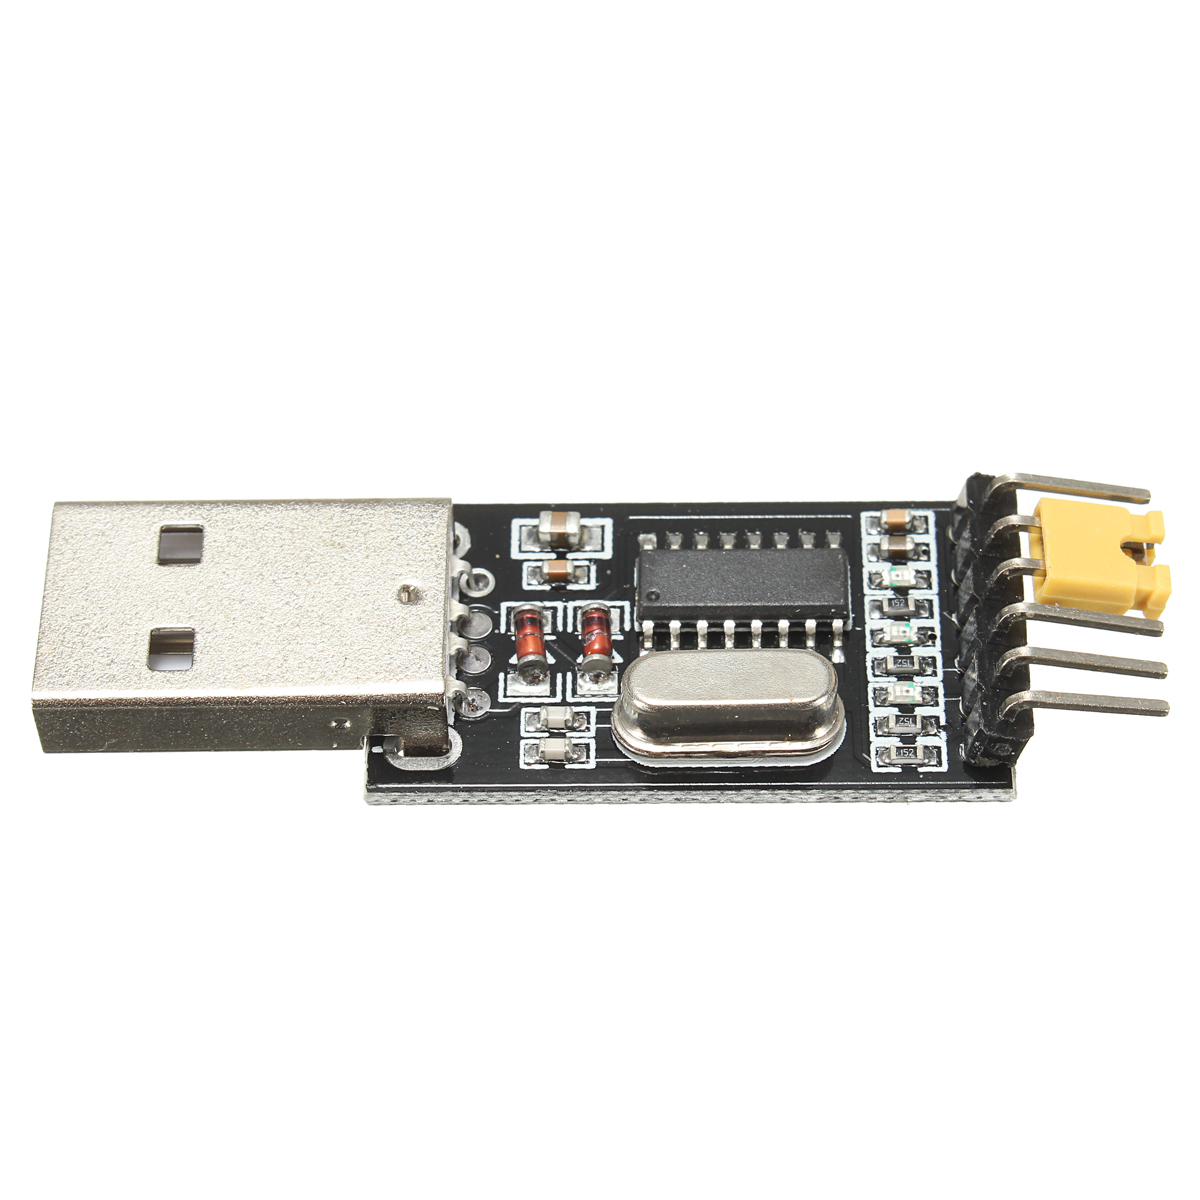 3pcs-33V-5V-USB-to-TTL-Converter-CH340G-UART-Serial-Adapter-Module-STC-1314969-4